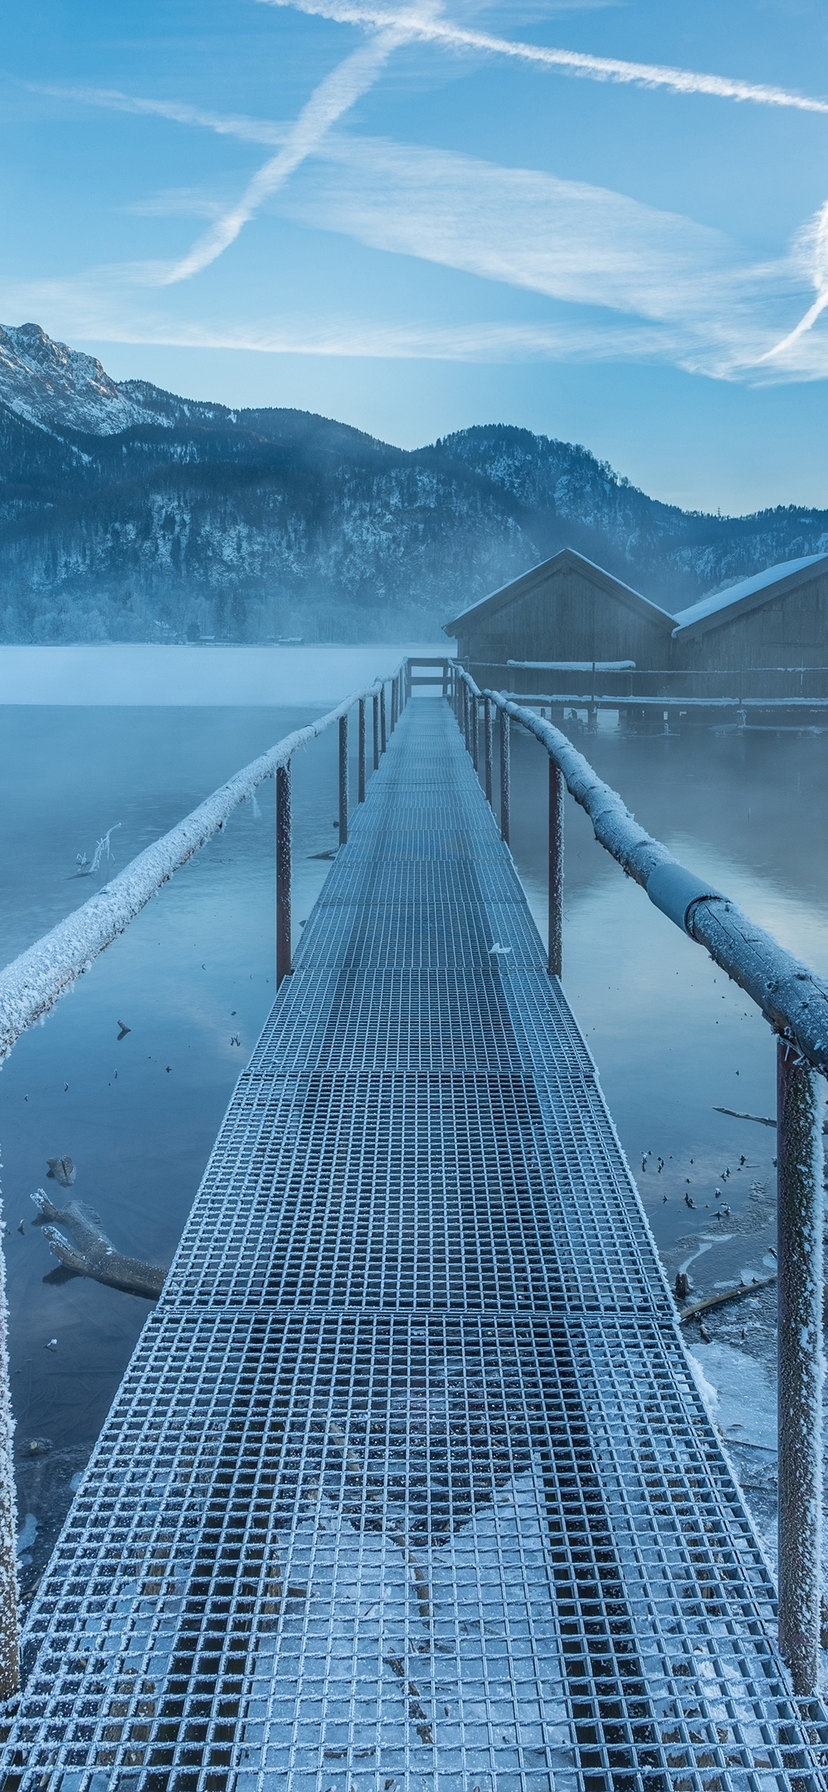 Image: nature, lake, bridge, mountains, winter, snow, ice